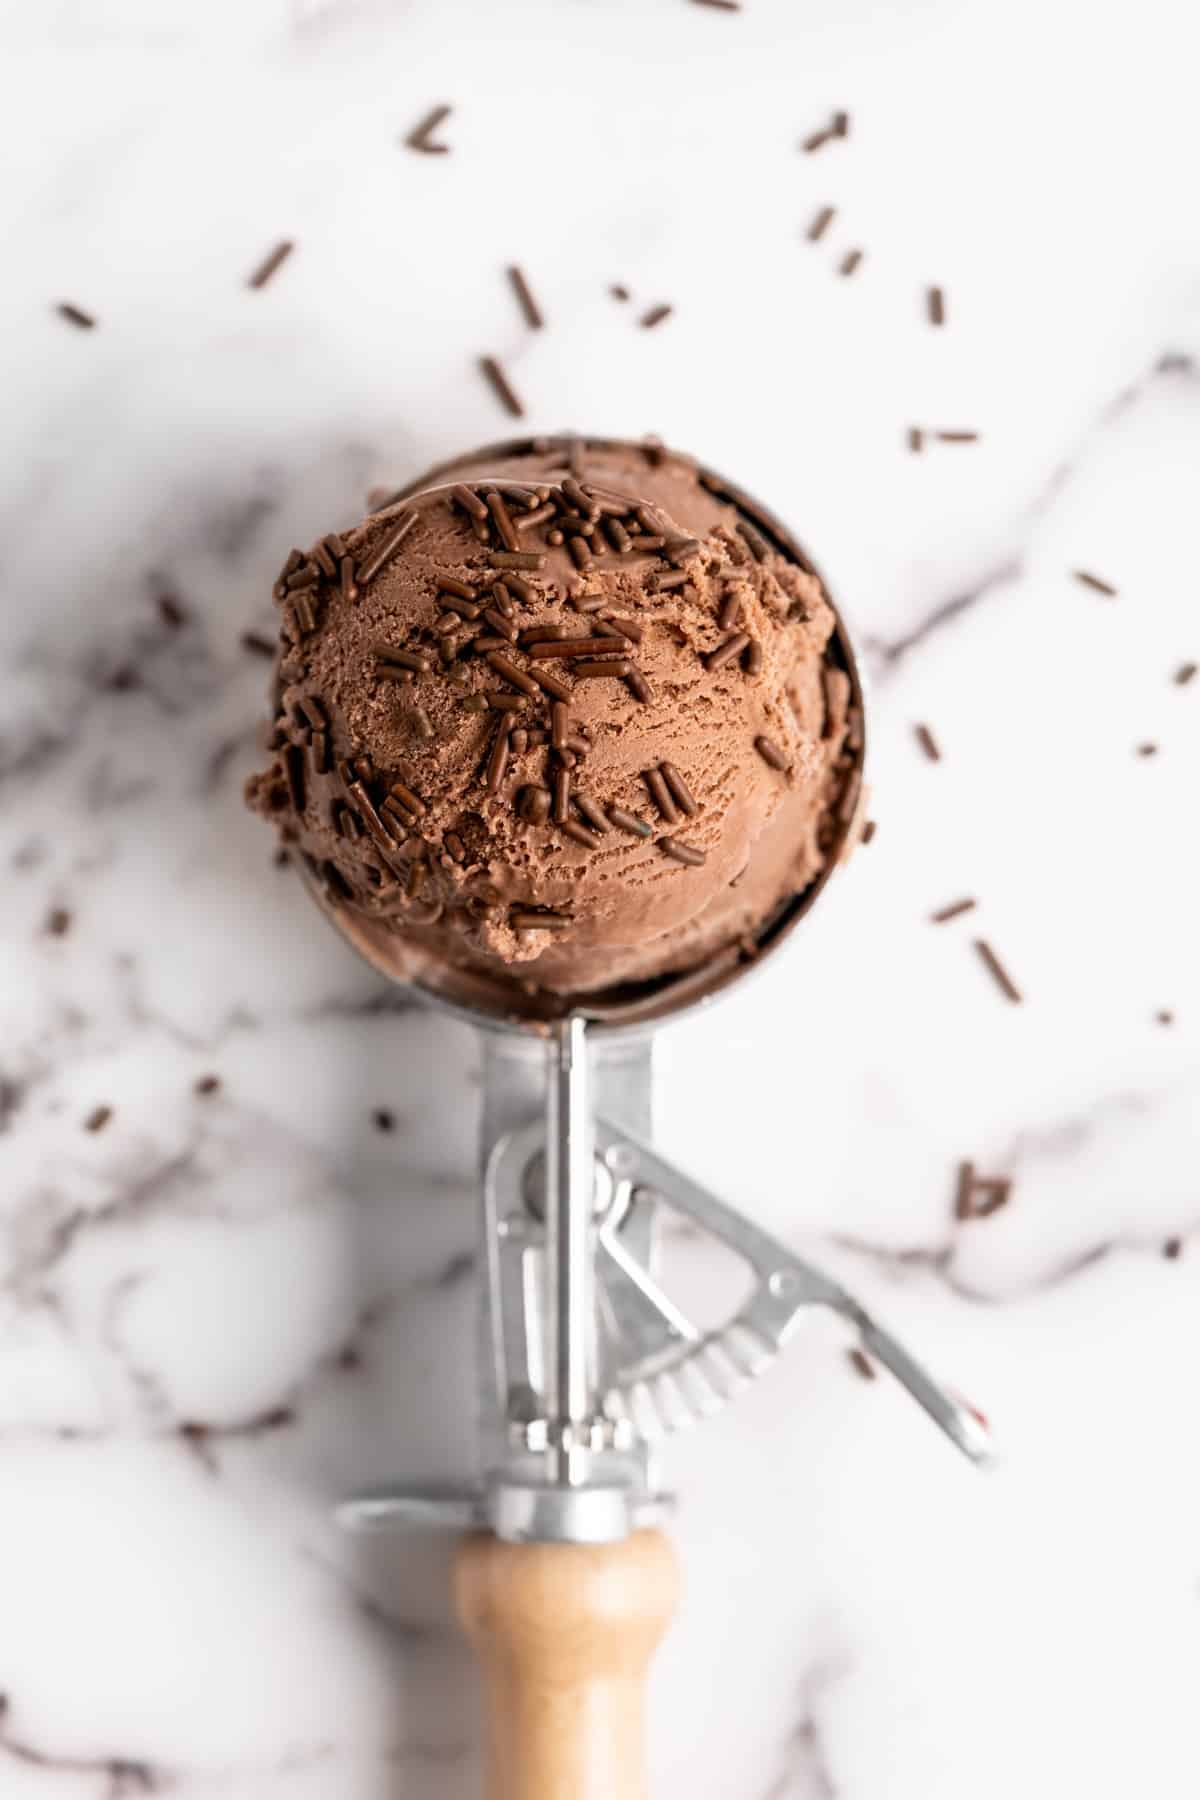 Scoop of Chocolate Avocado Ice Cream with sprinkles